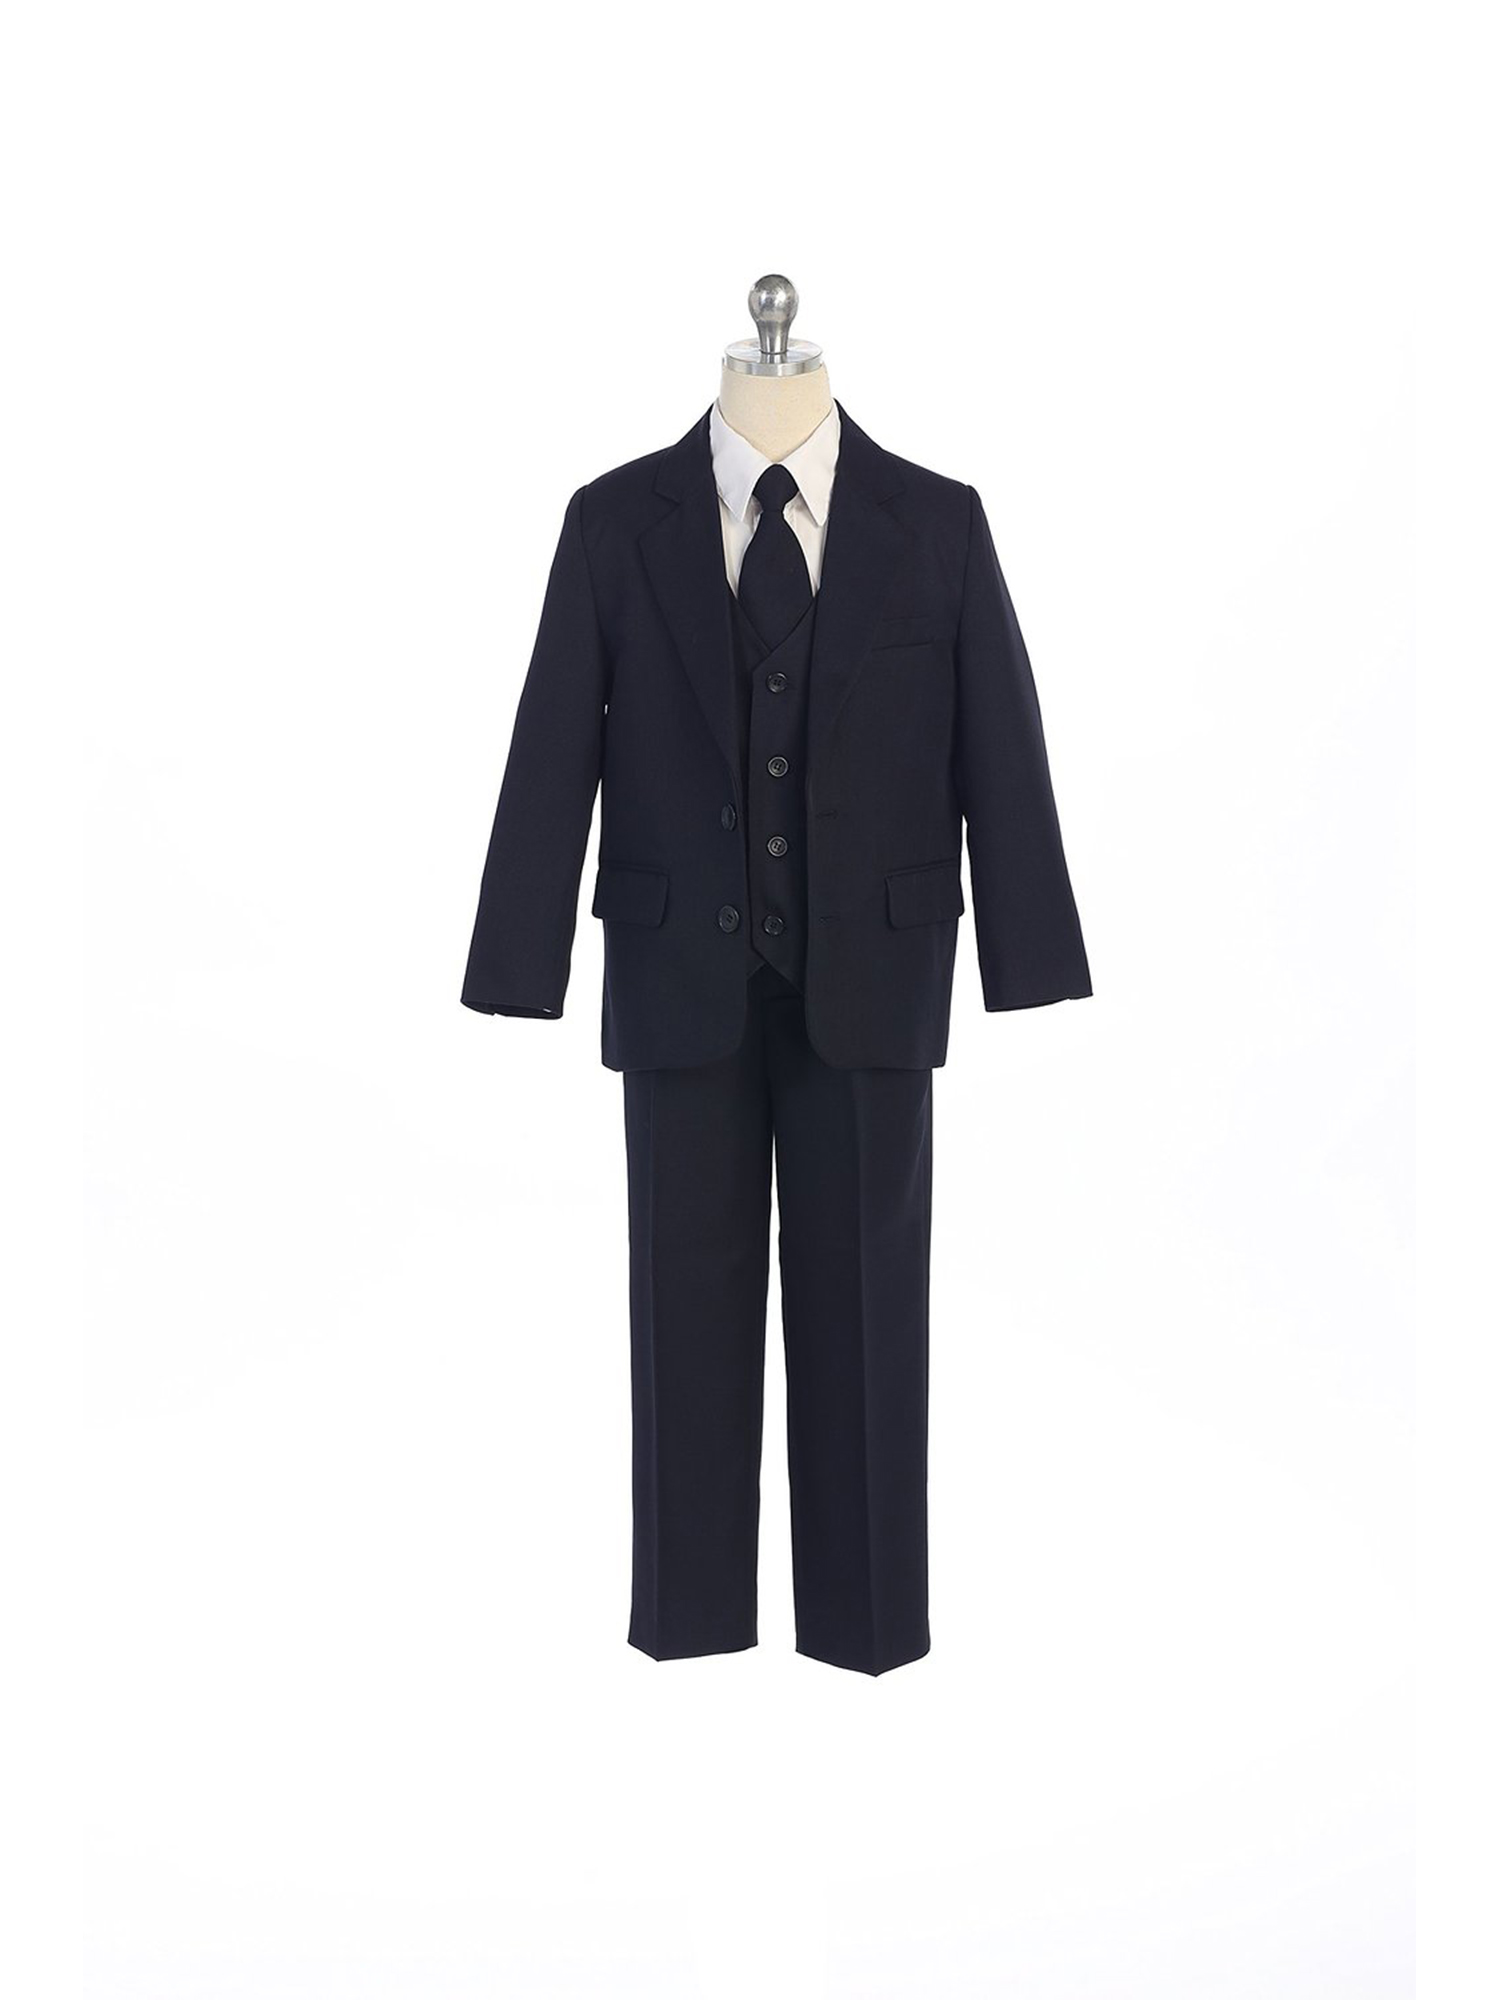 COLE Boys Suit with Shirt and Vest (5-Piece) - Navy Blue - Size 14